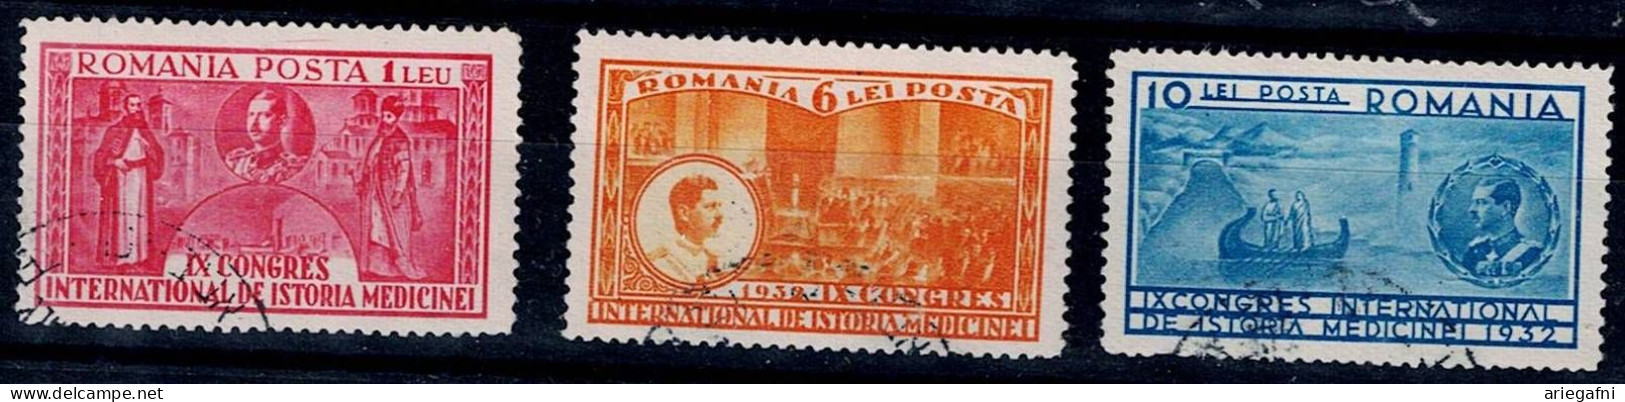 ROMANIA 1932 INTERNATIONAL CONGRESS ON THE HISTORY OF MEDICINE, BUCHAREST MI No 443-5 USED VF!! - Usado